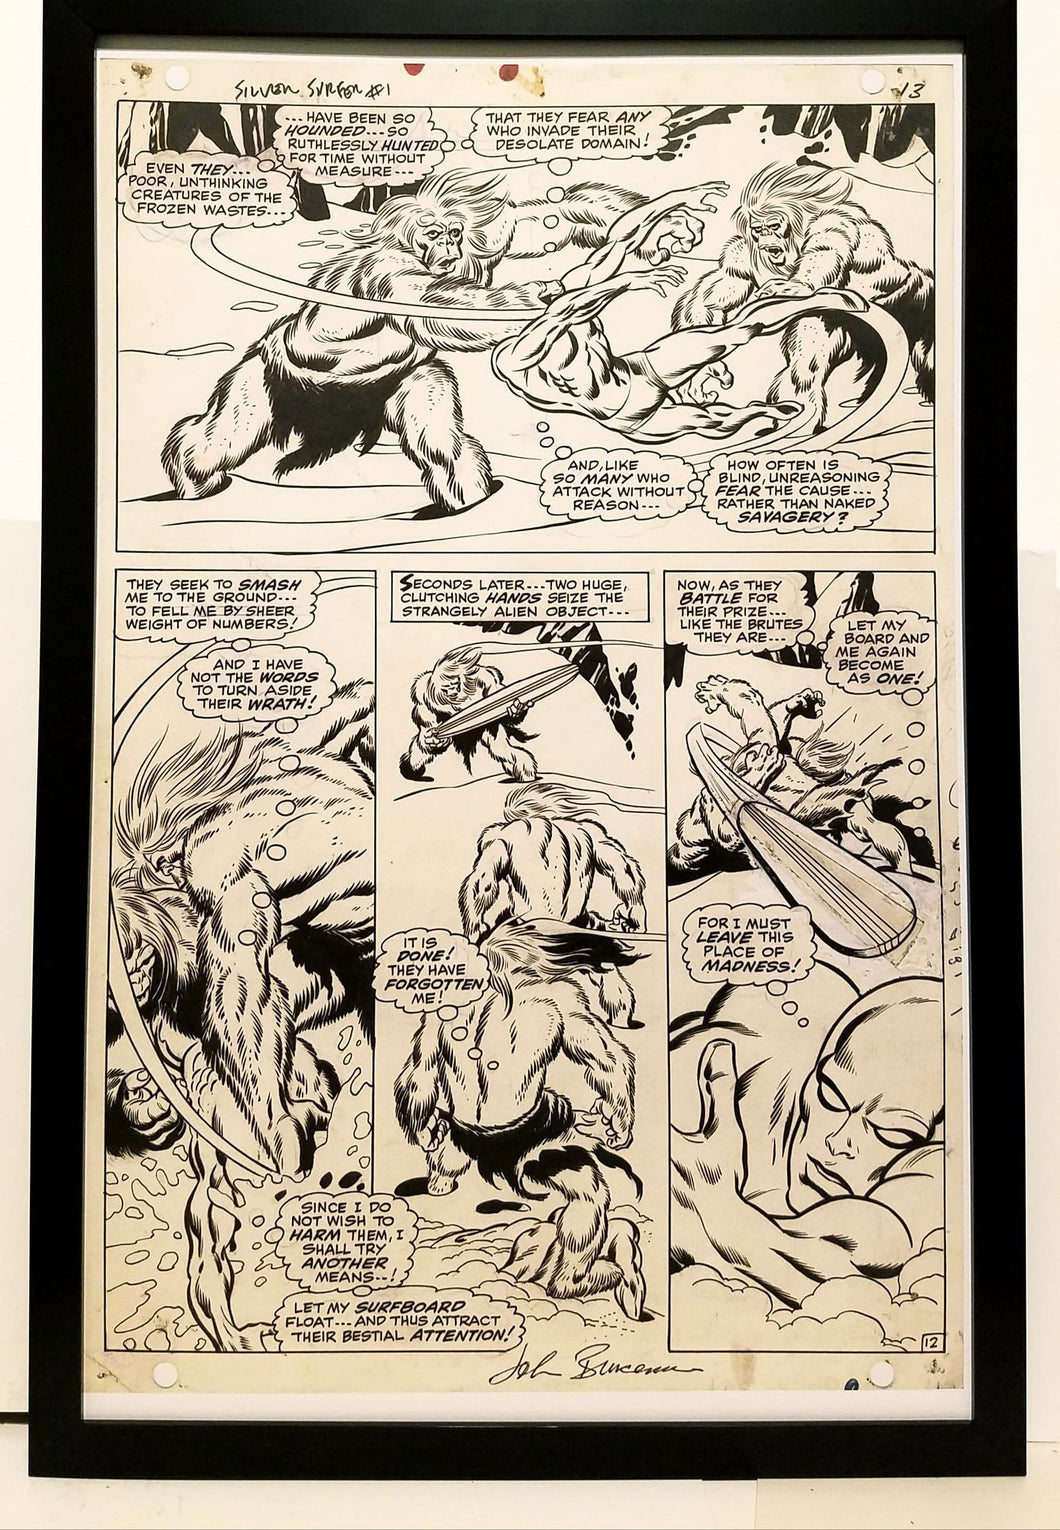 Silver Surfer #1 pg. 12 by John Buscema 11x17 FRAMED Original Art Poster Marvel Comics